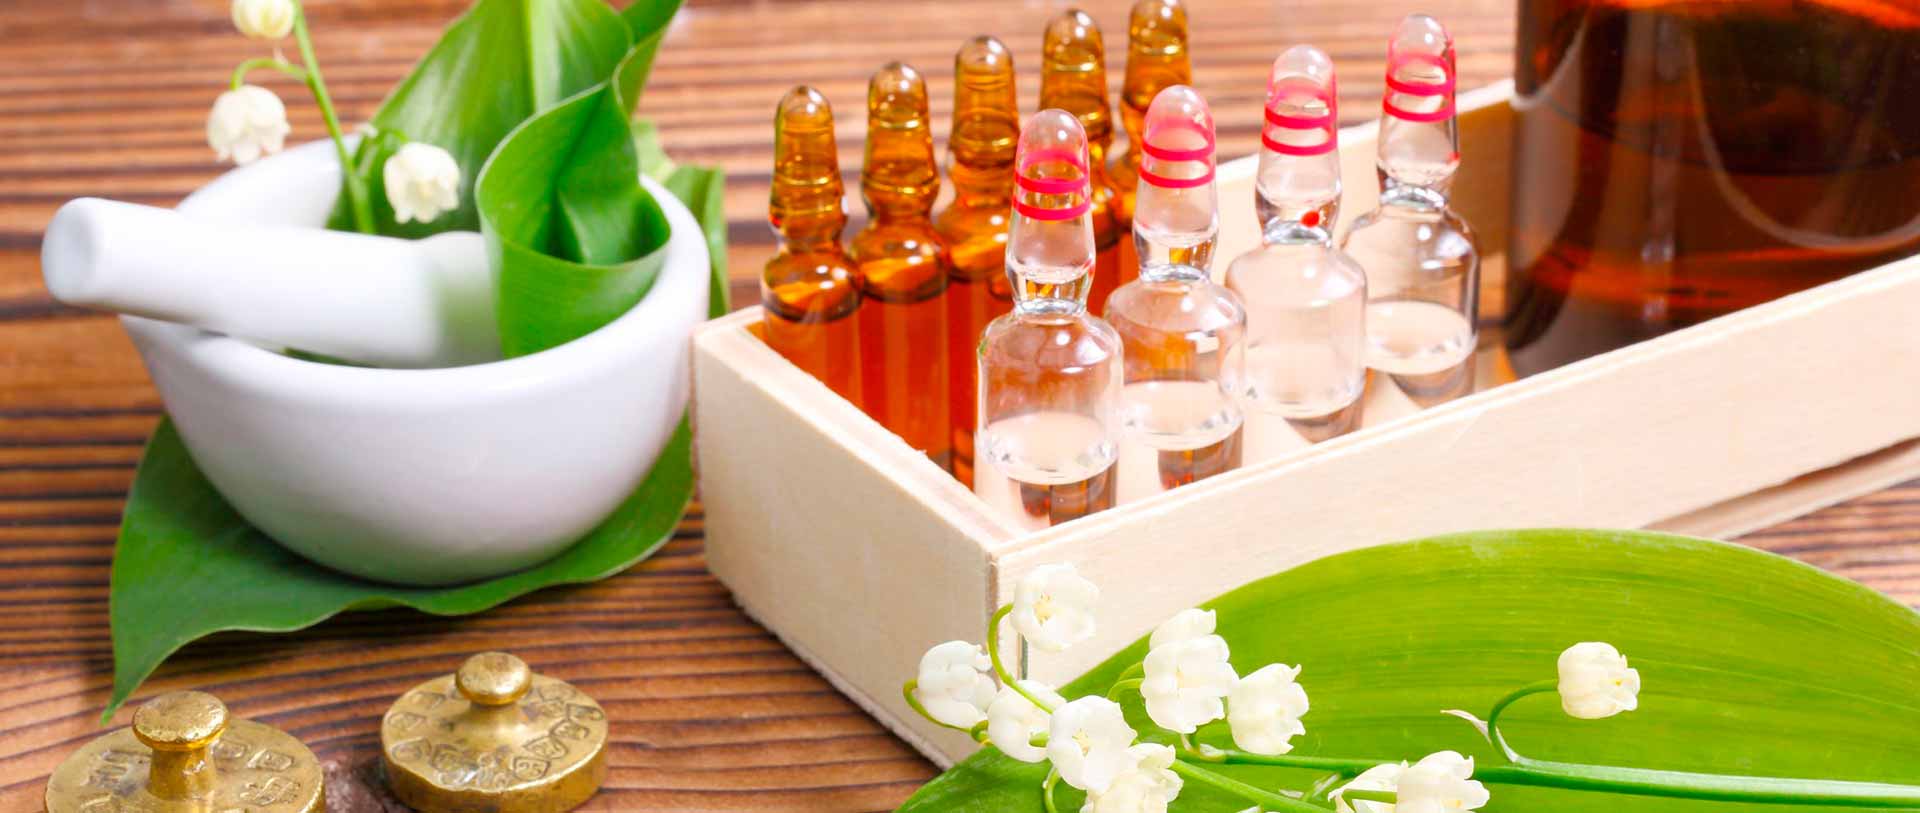 Productos de homeopatía